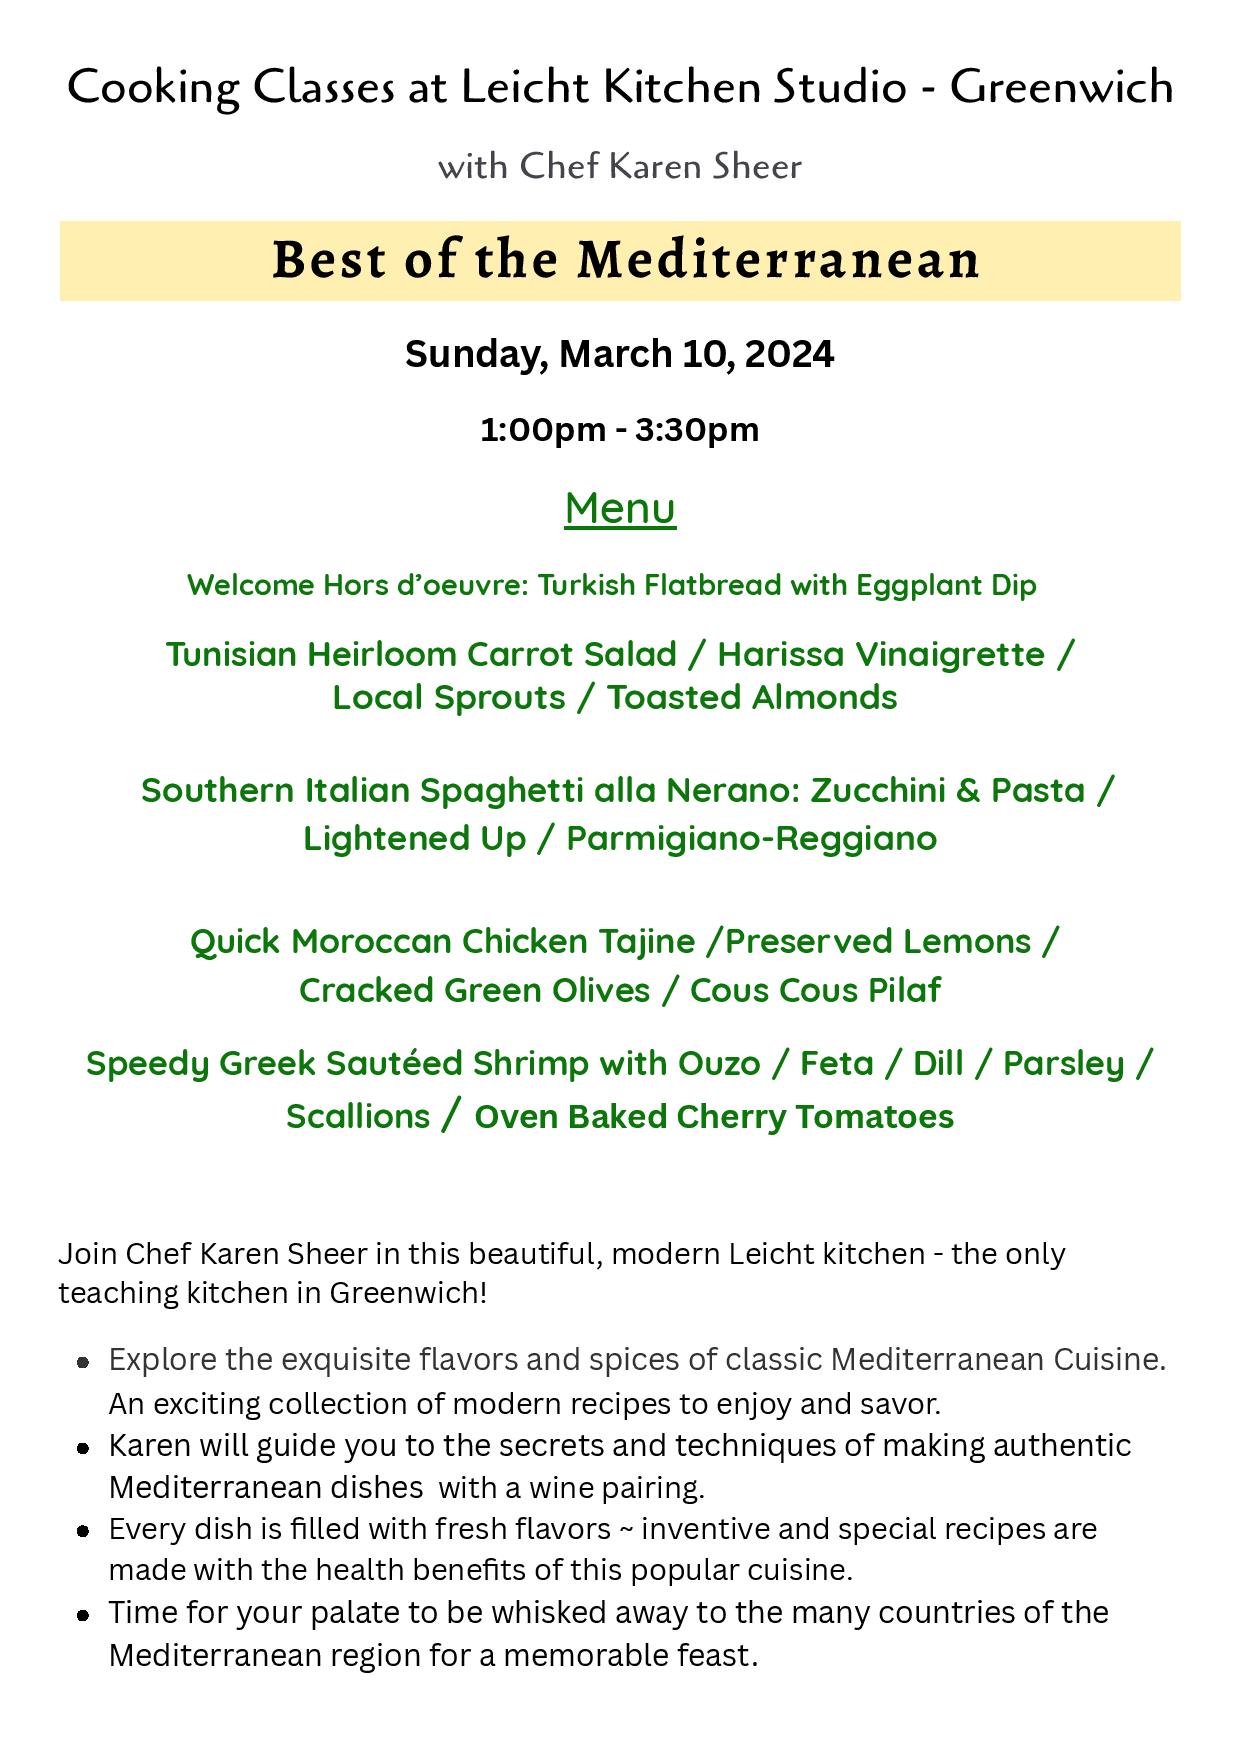 Greenwich Cooking Class "Best Of Mediterranean" -Leicht, March 10, 2024